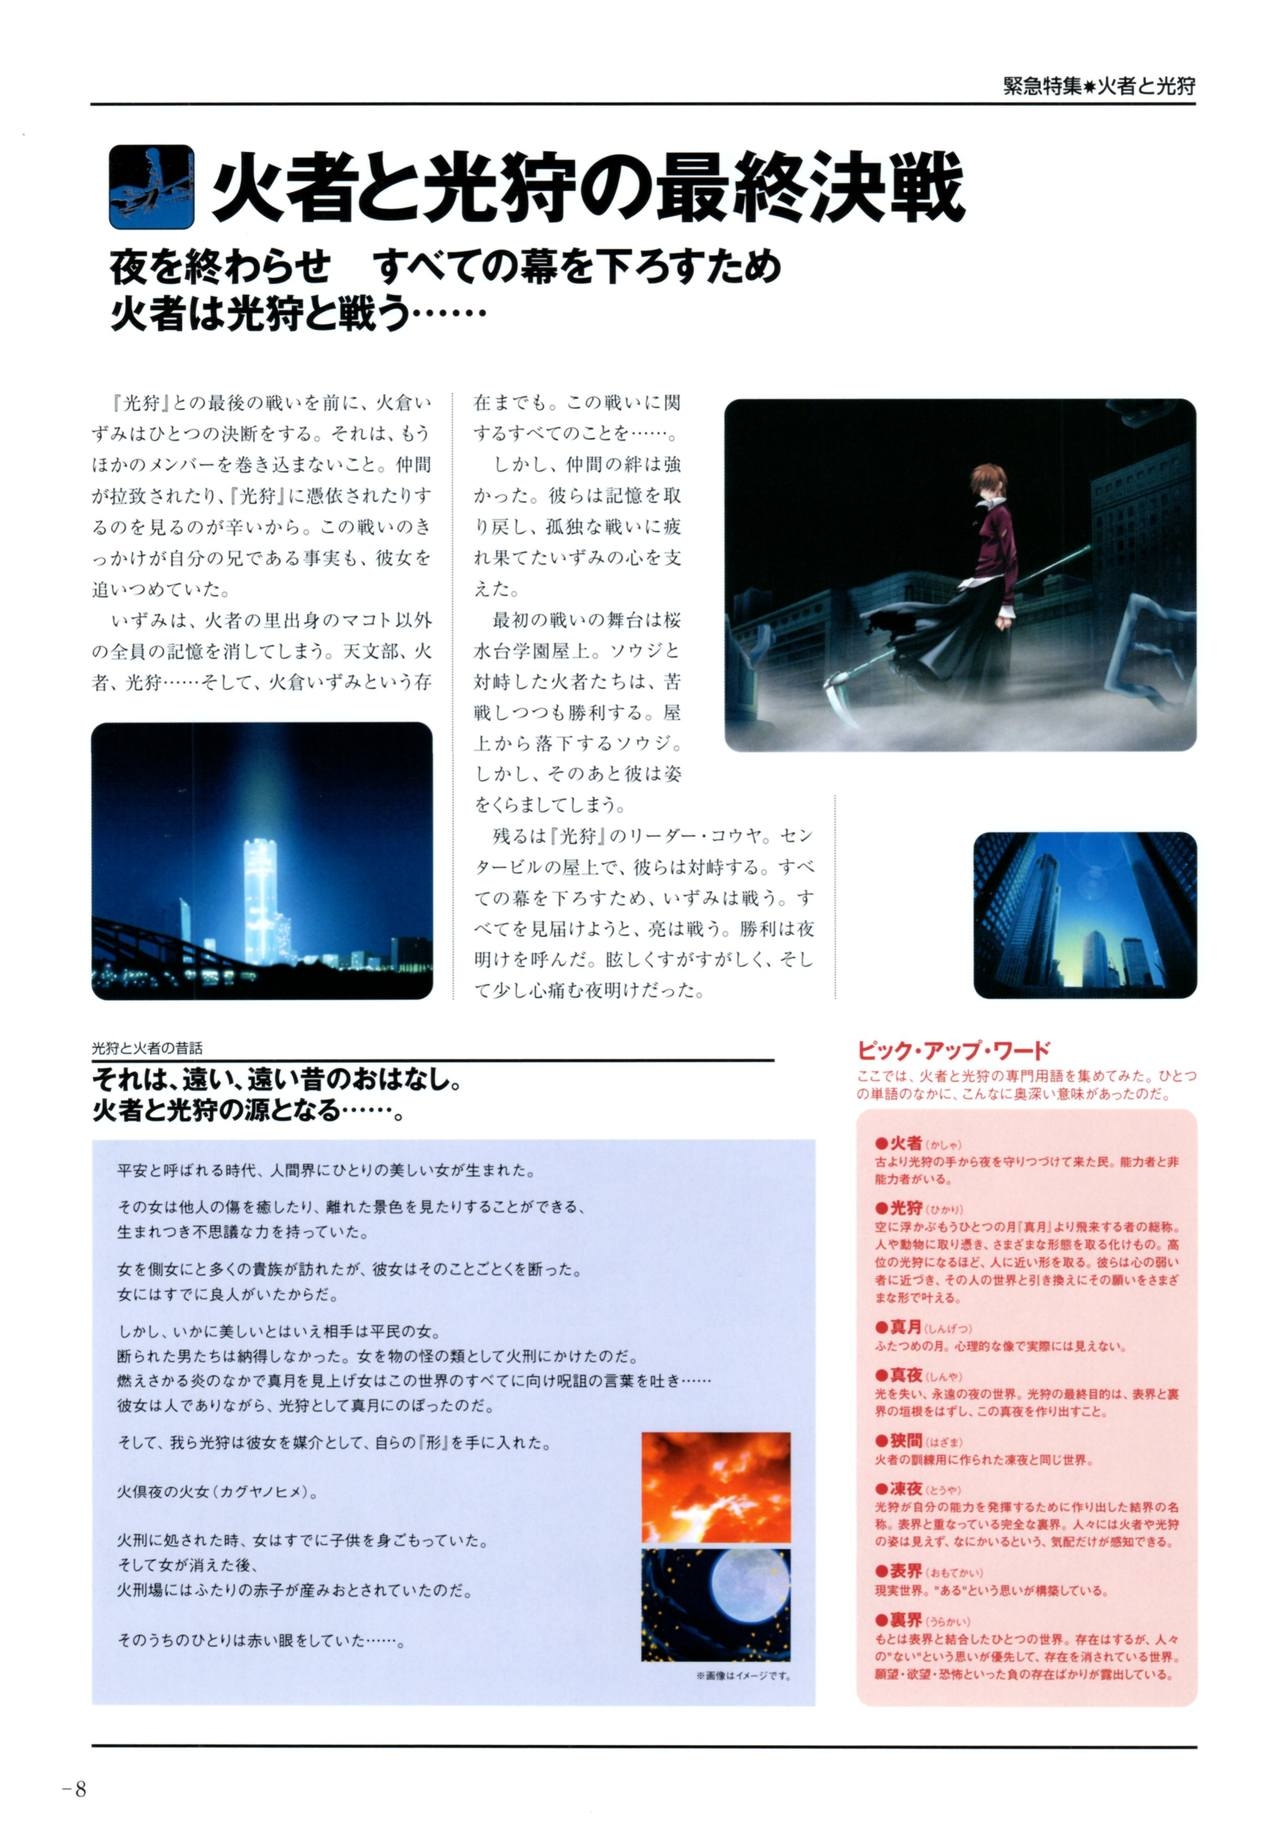 Yoru Ga Kuru! Square Of The Moon Visual Fan Book 13